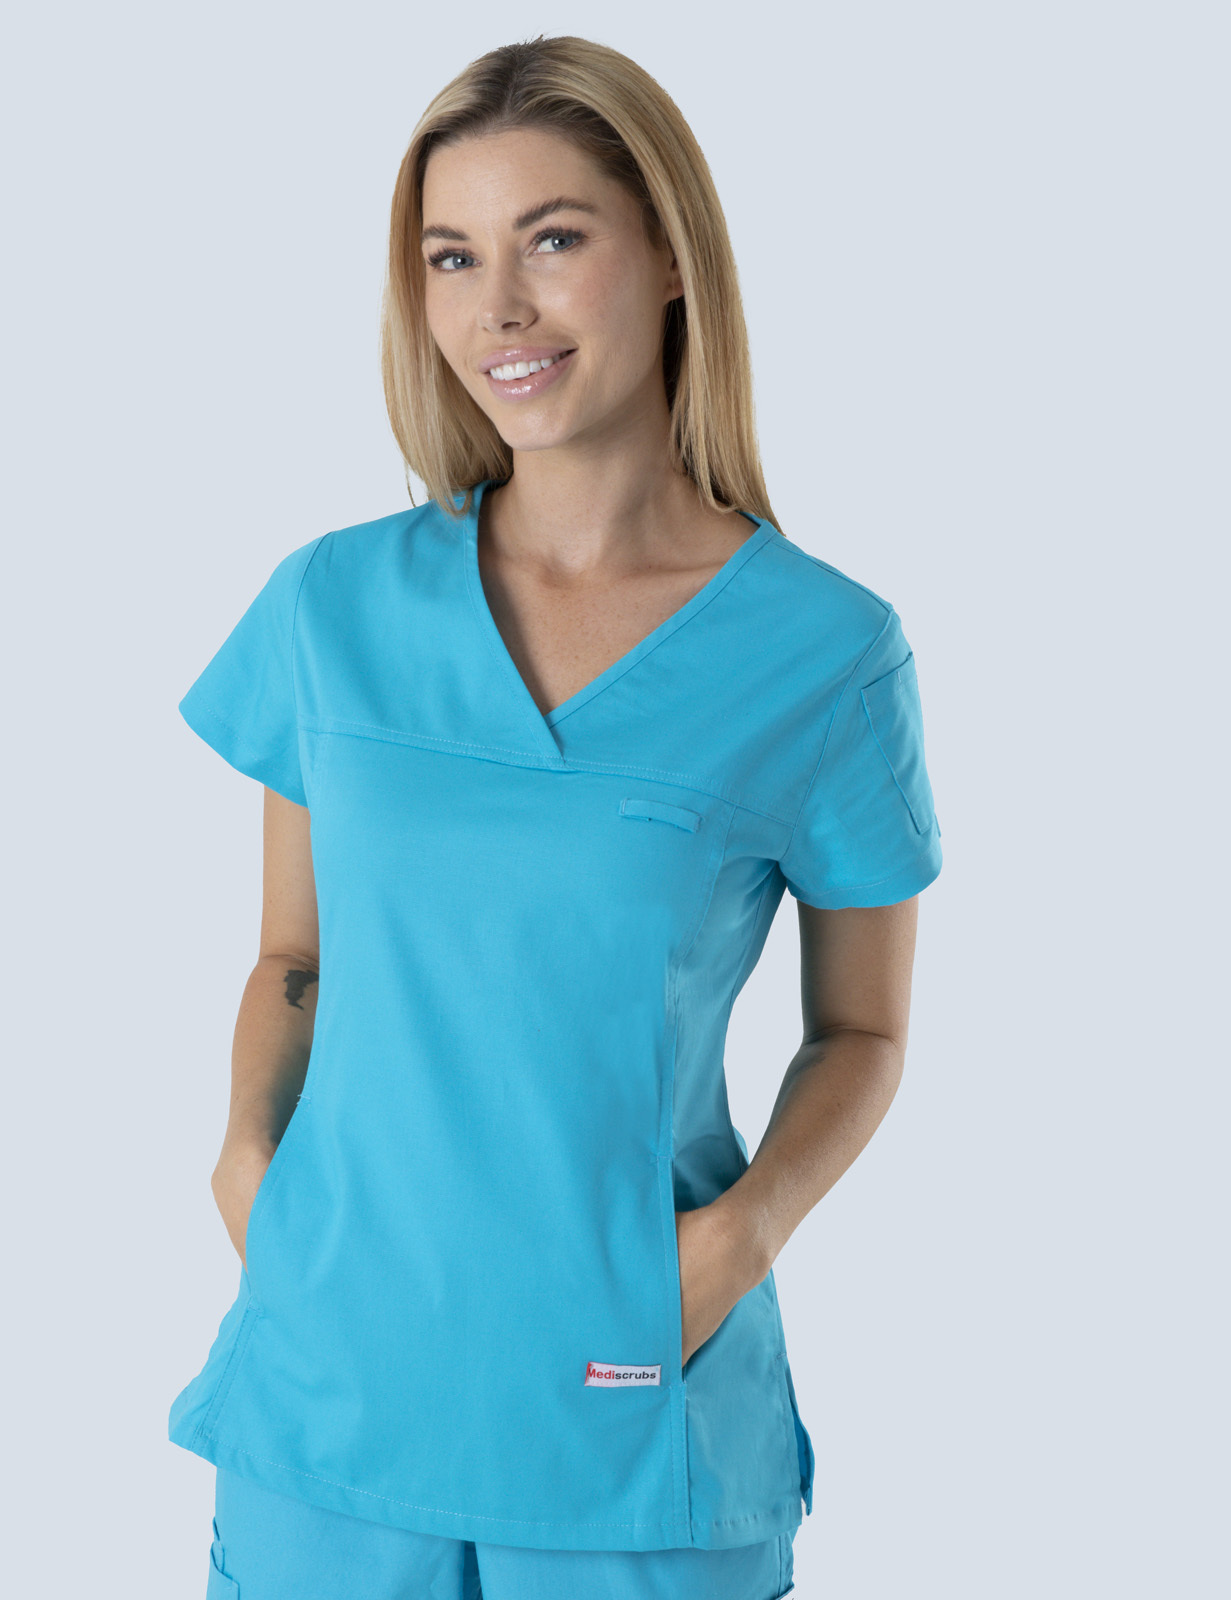 Queensland Children's Hospital Emergency Department Enrolled Nurse Uniform Top Bundle  (Women's Fit Top in Aqua incl Logos)